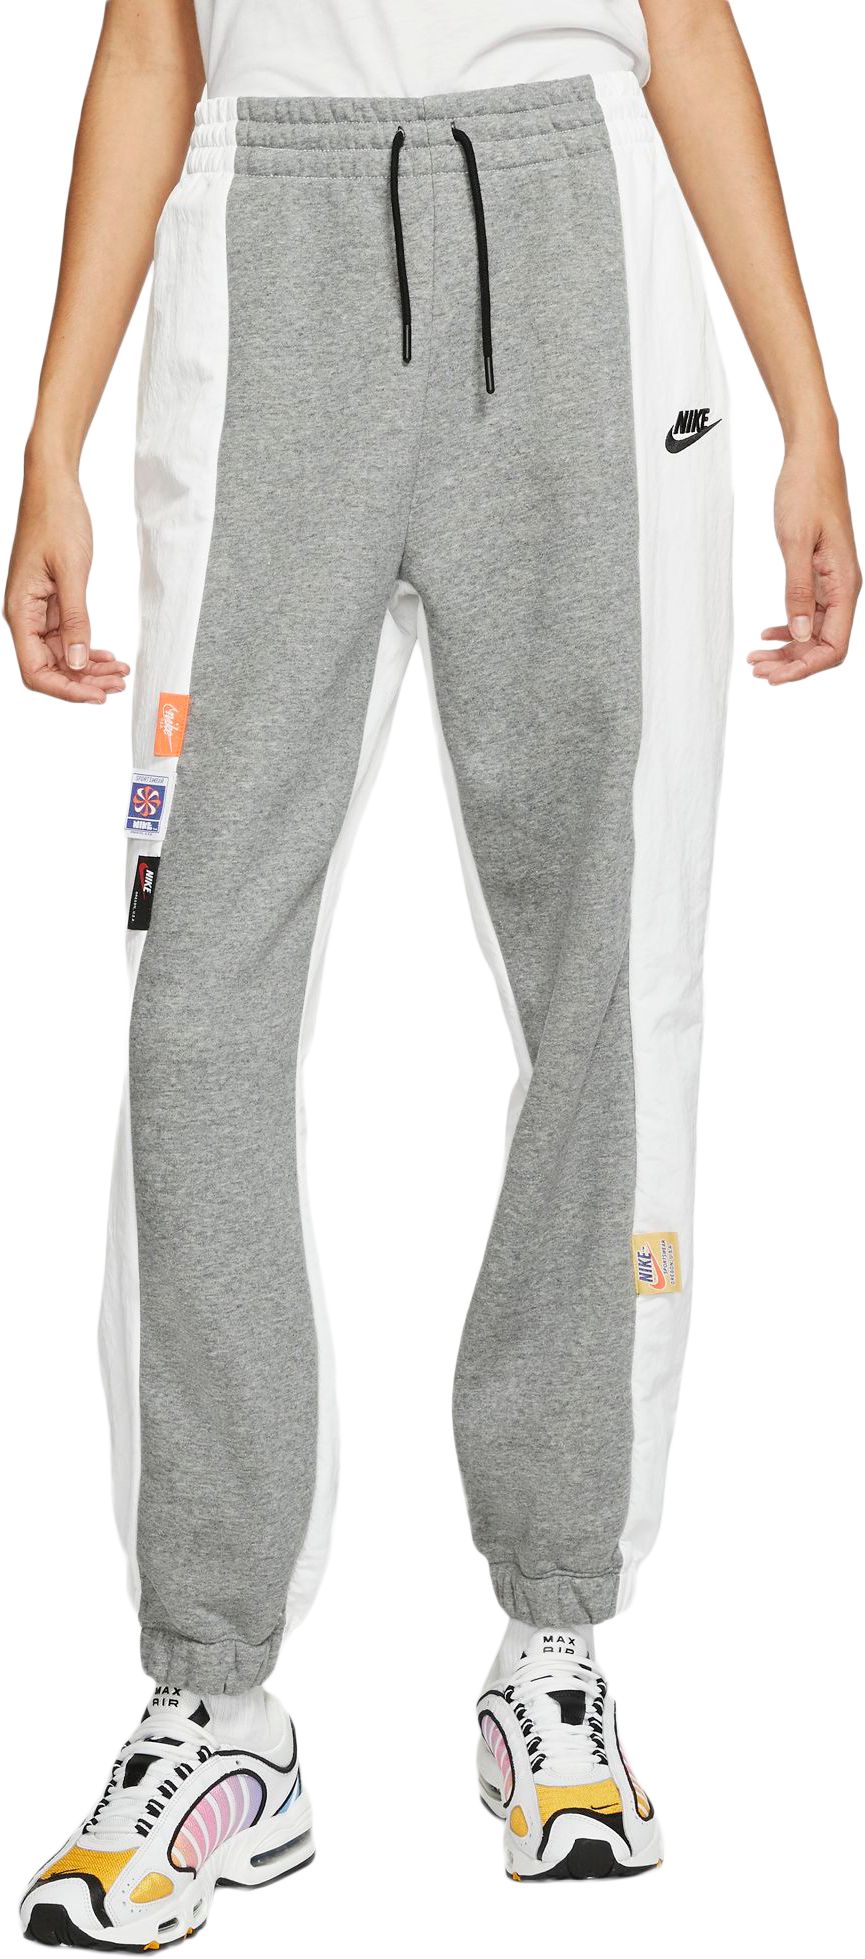 nike grey and white sweatpants